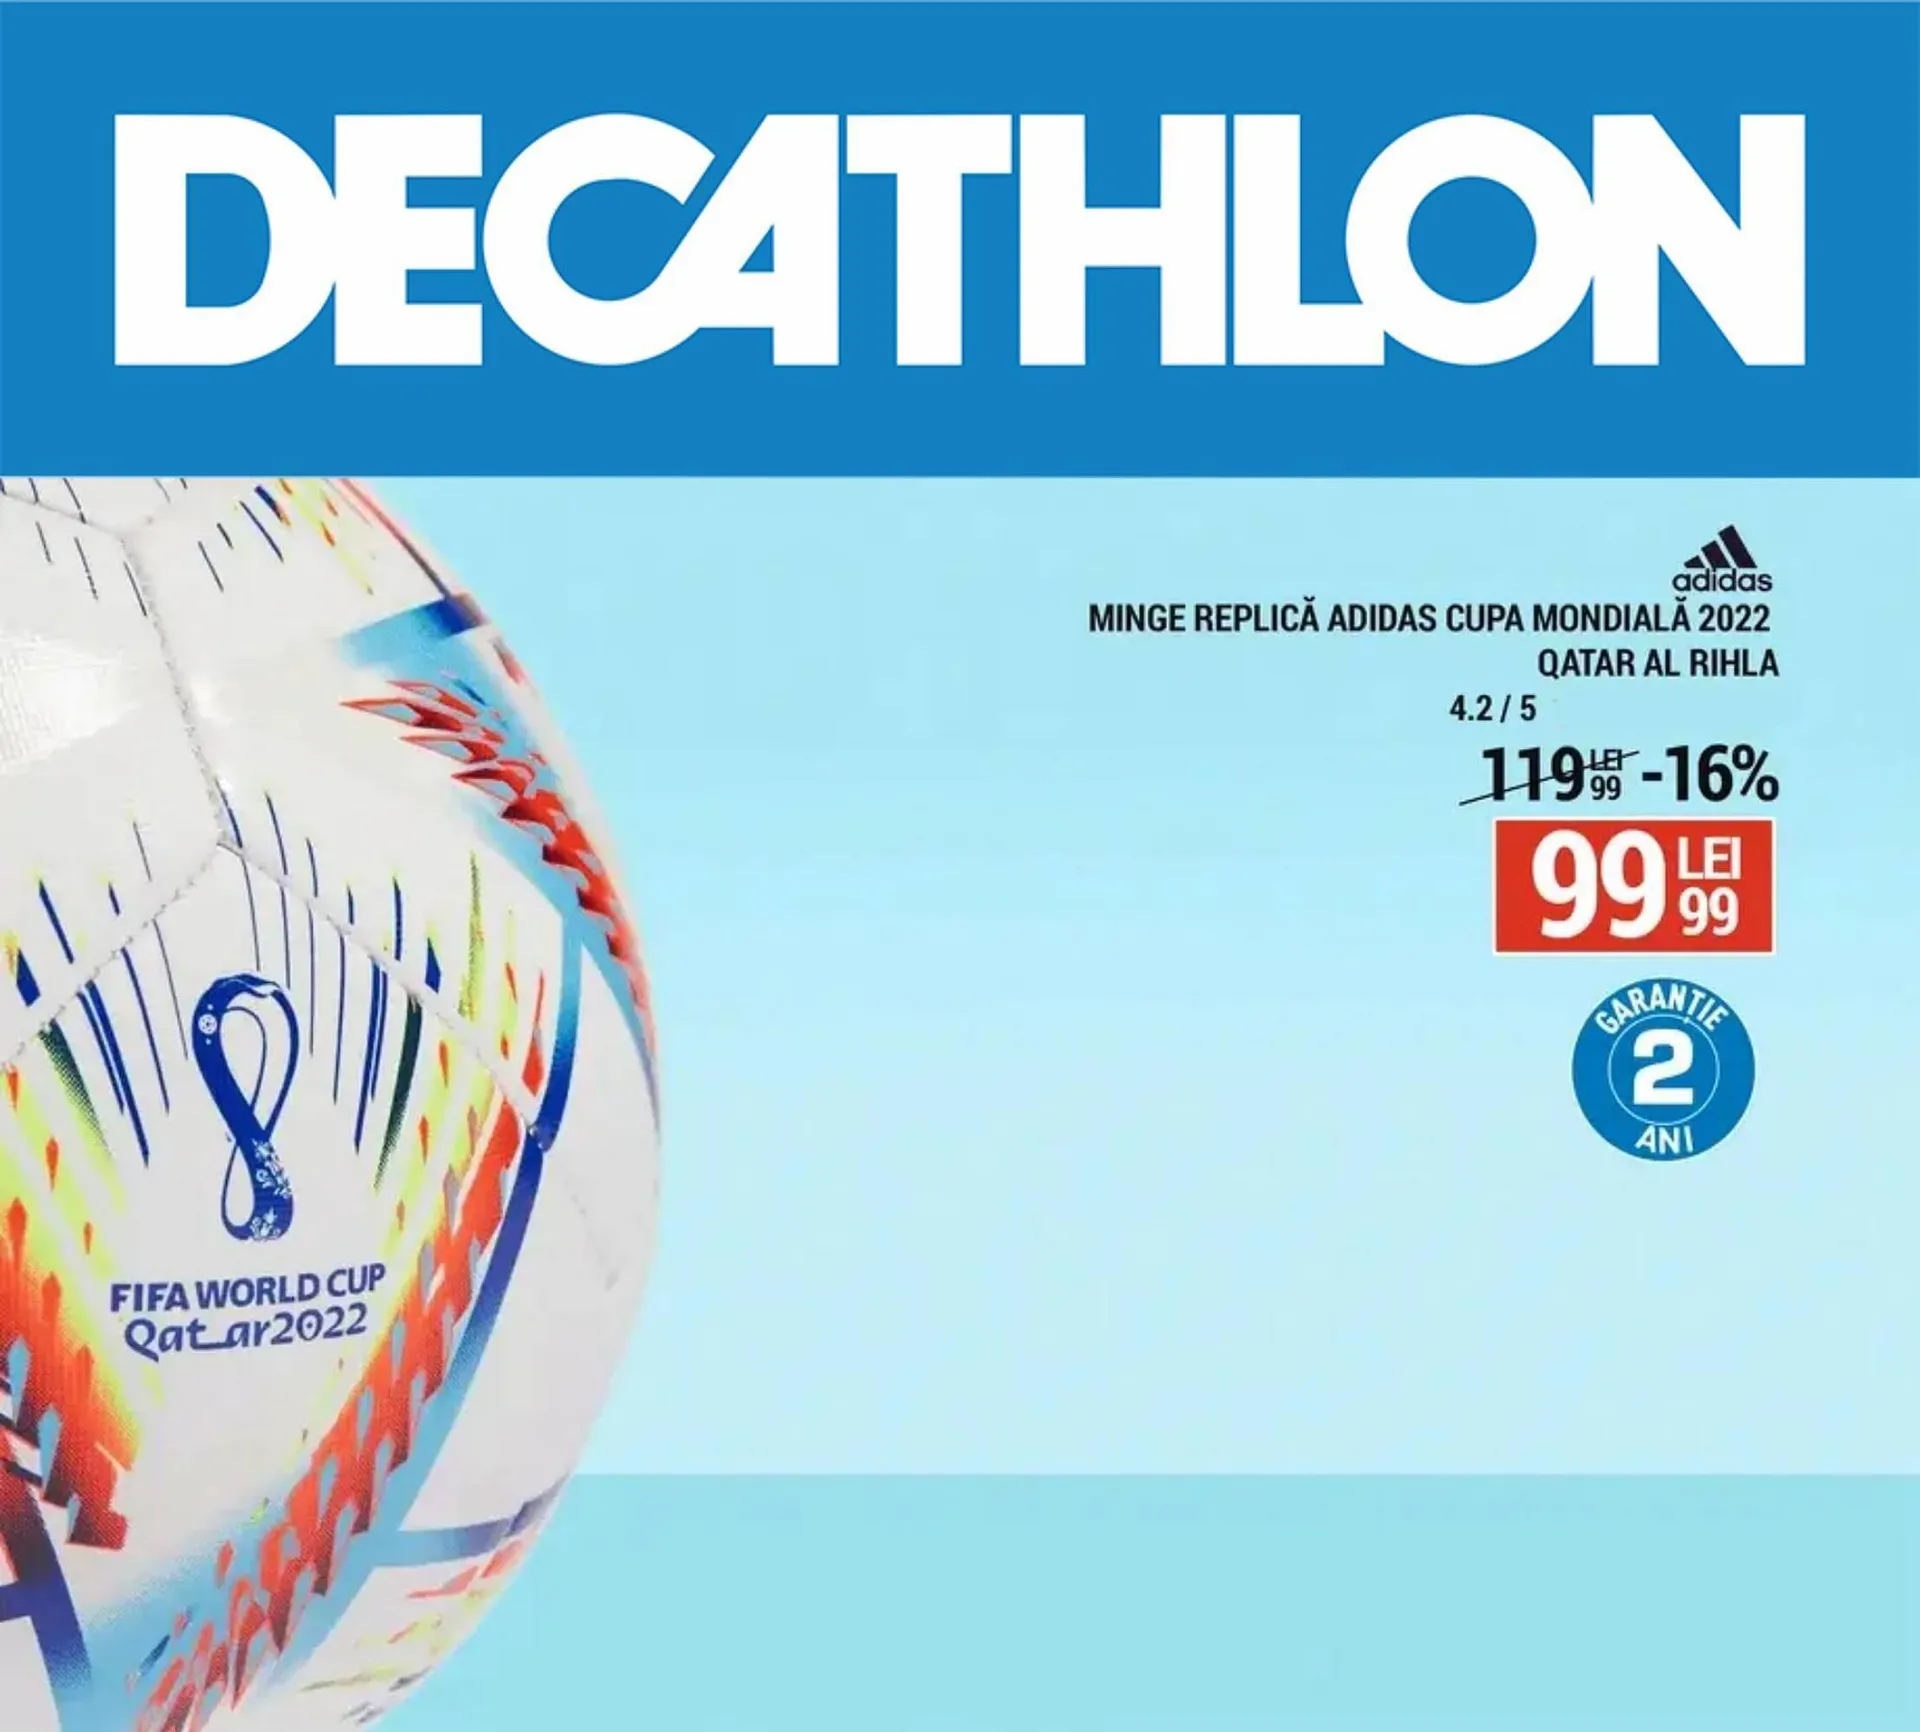 Decathlon catalog - 4